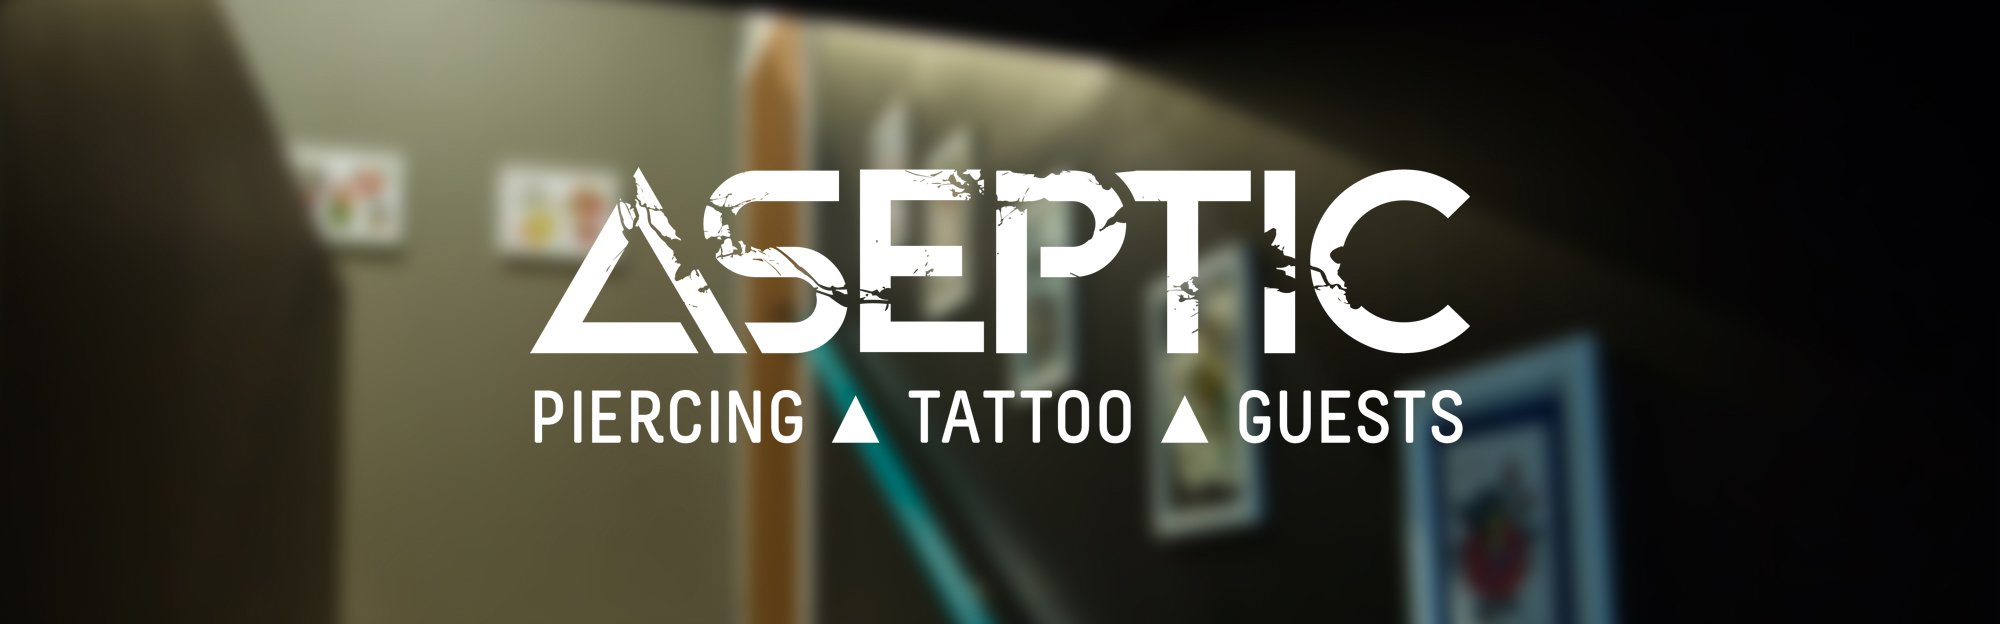 slide1-tattoo-trento-aseptic